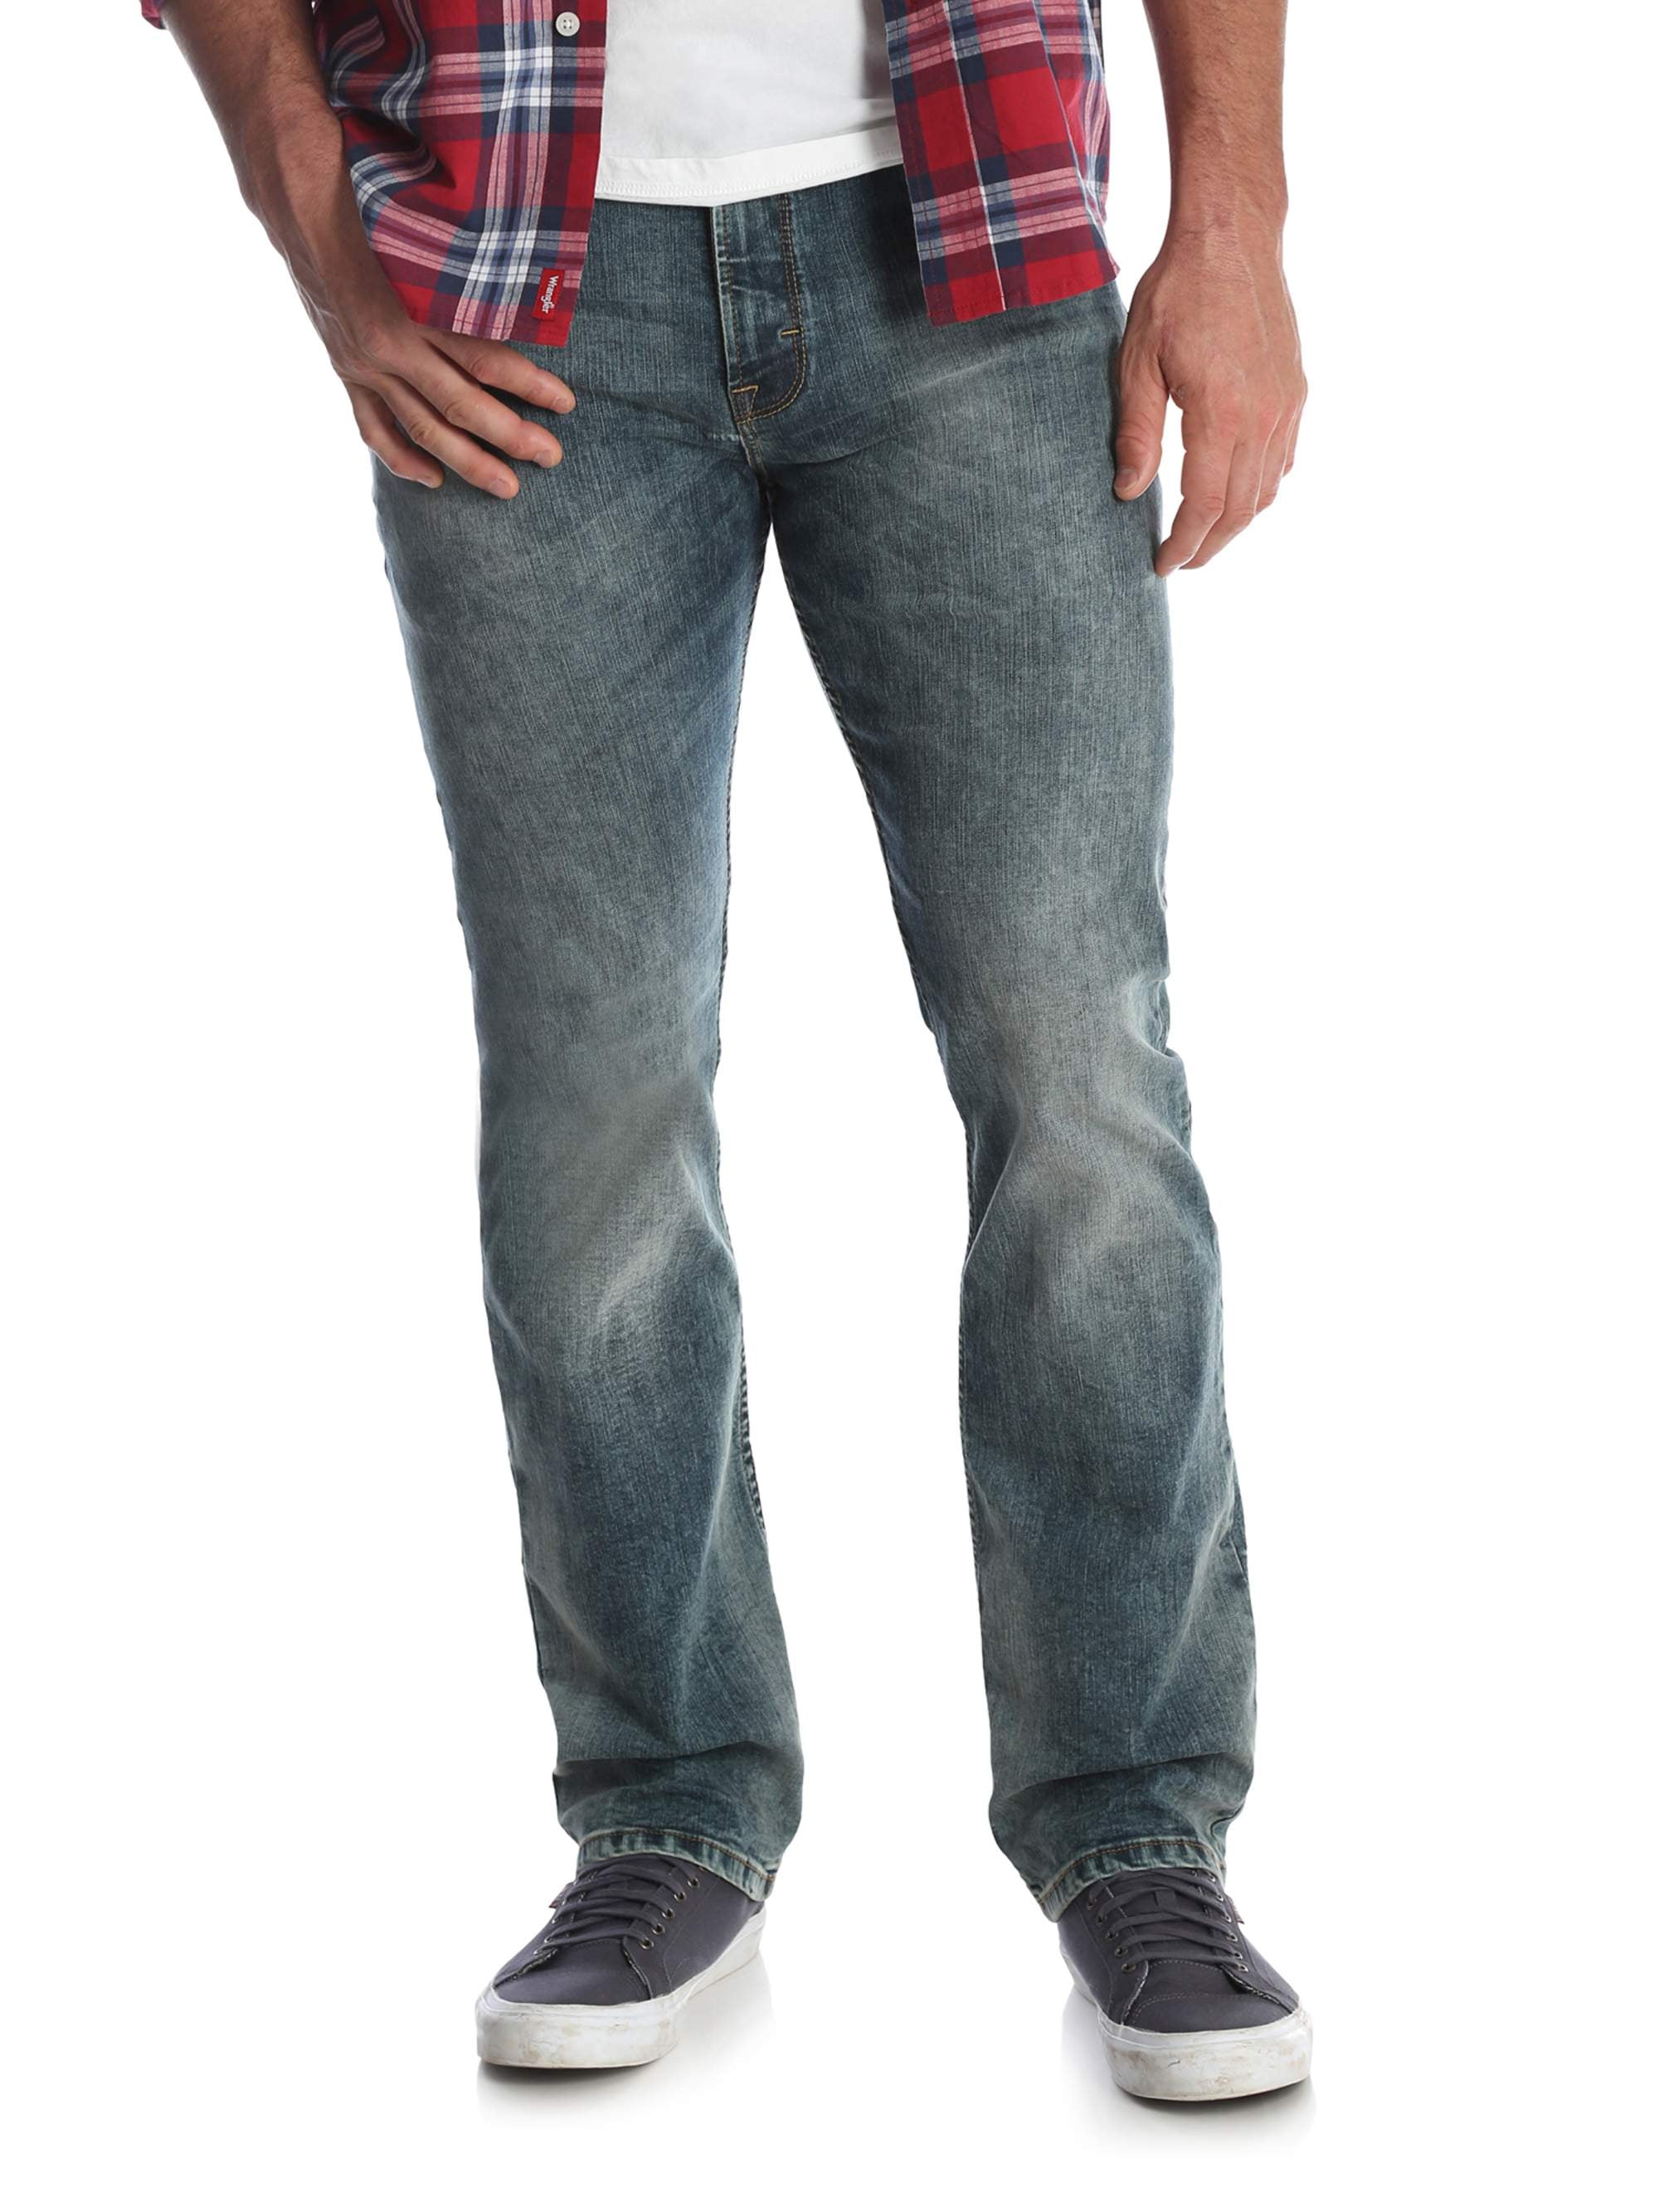 wrangler slim straight flex jeans walmart